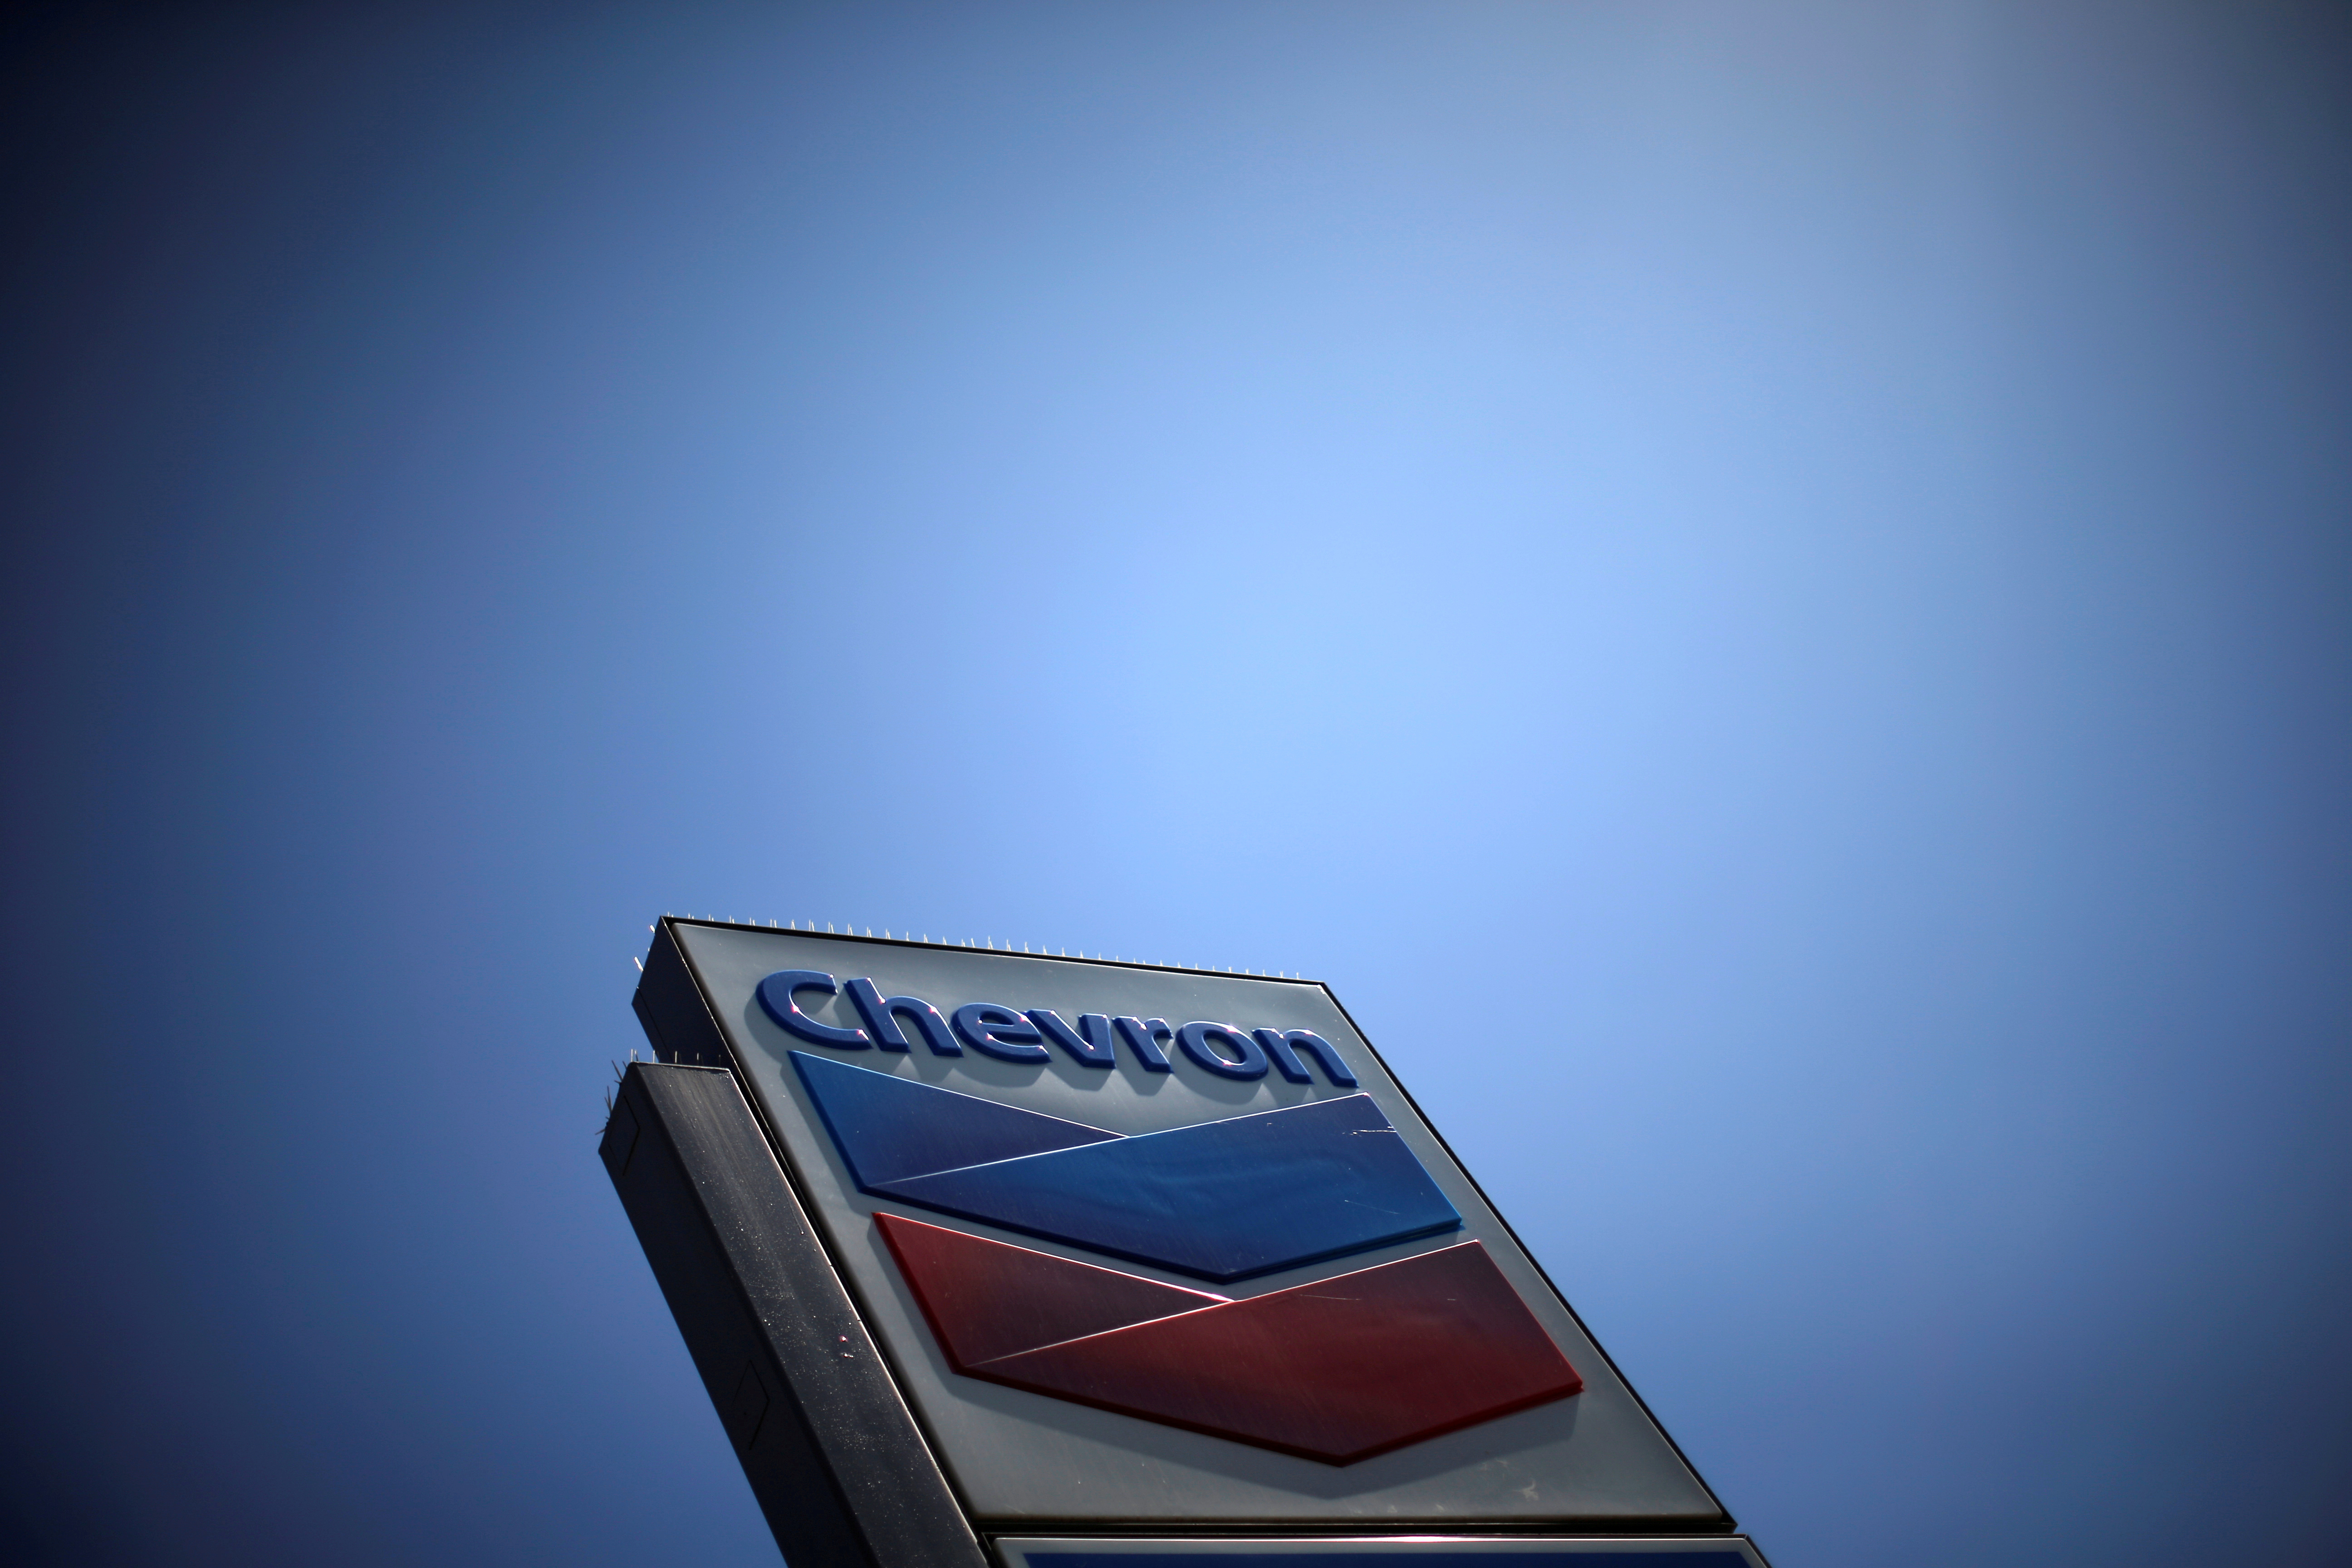 Chevron (CVX)'s logo is seen in Los Angeles